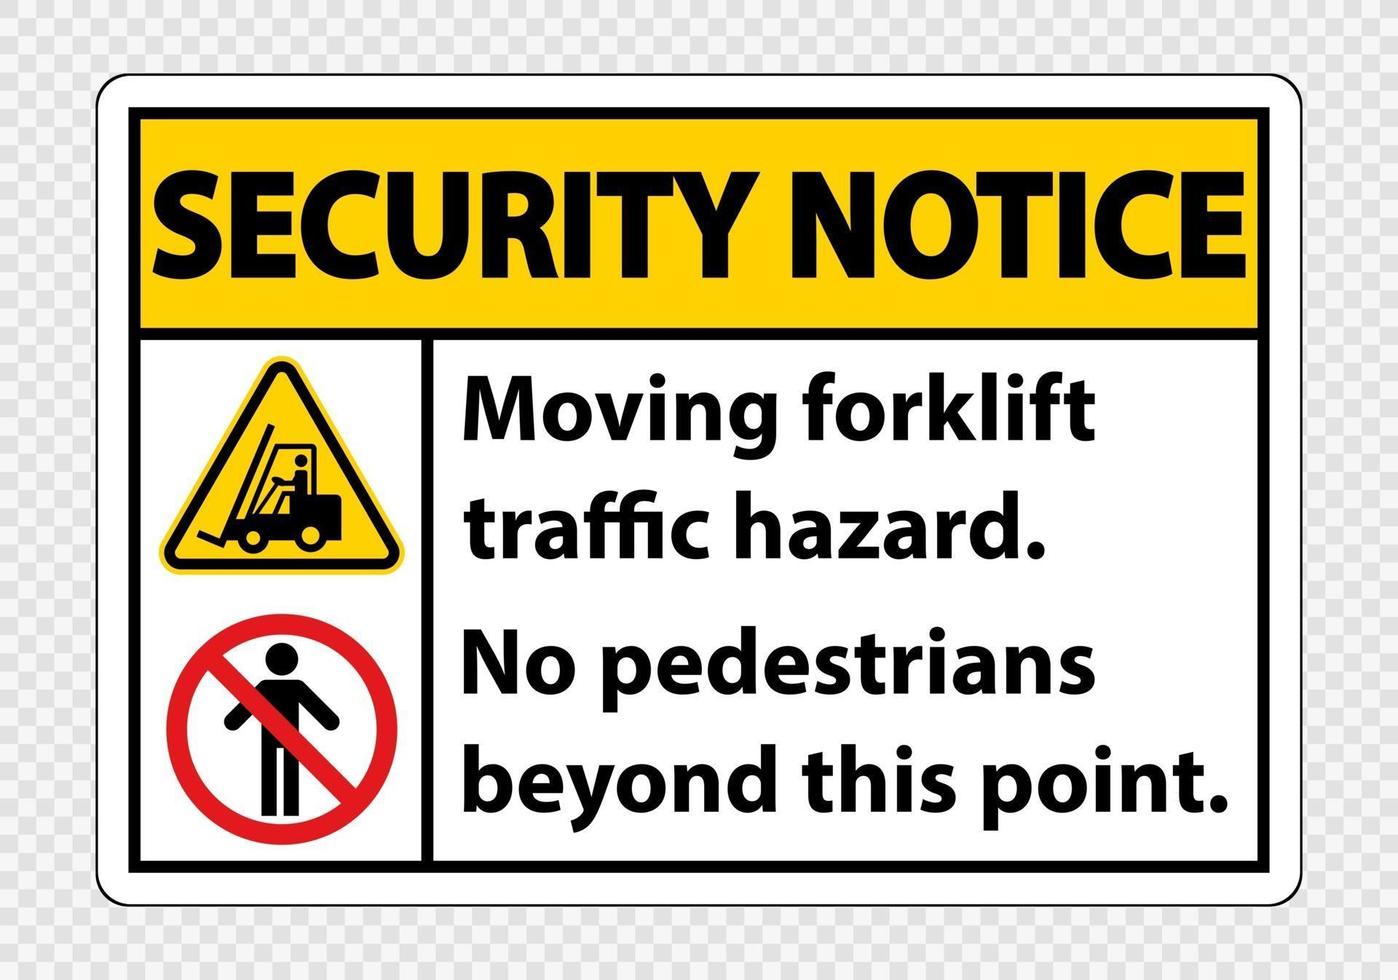 Moving forklift traffic hazard No pedestrians beyond this point Symbol vector